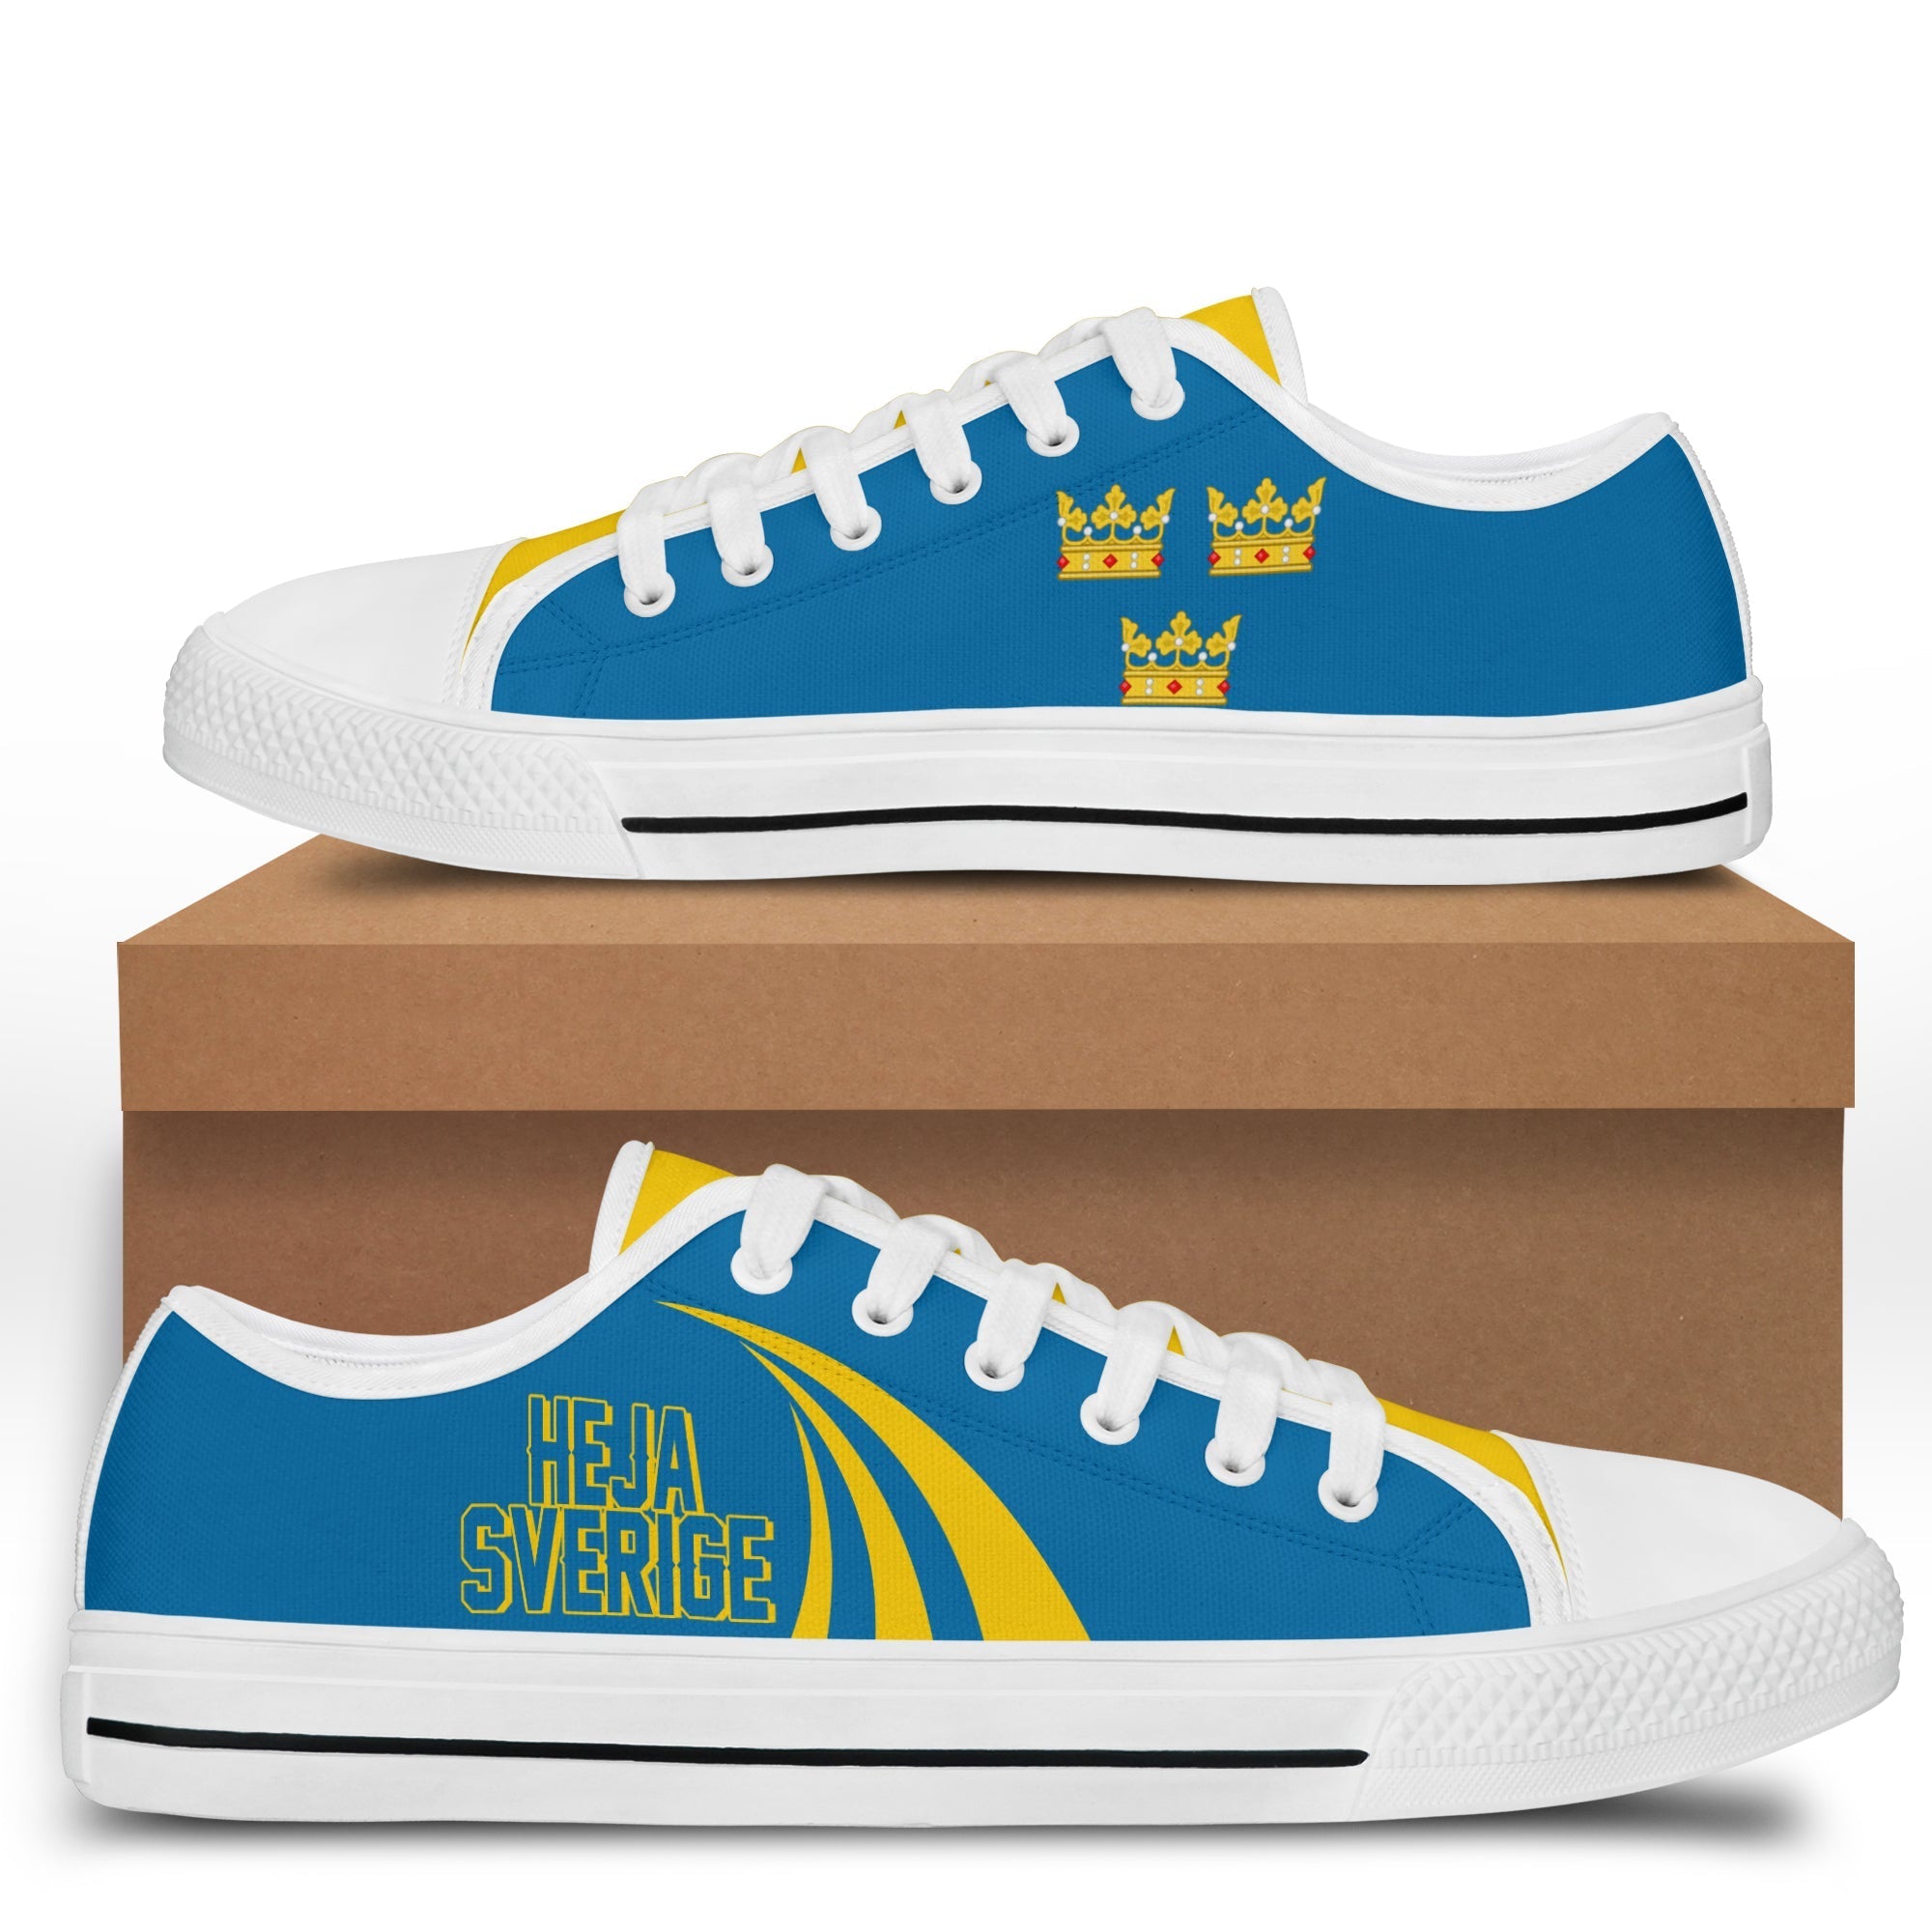 sweden-three-crowns-low-top-shoes-heja-sverige